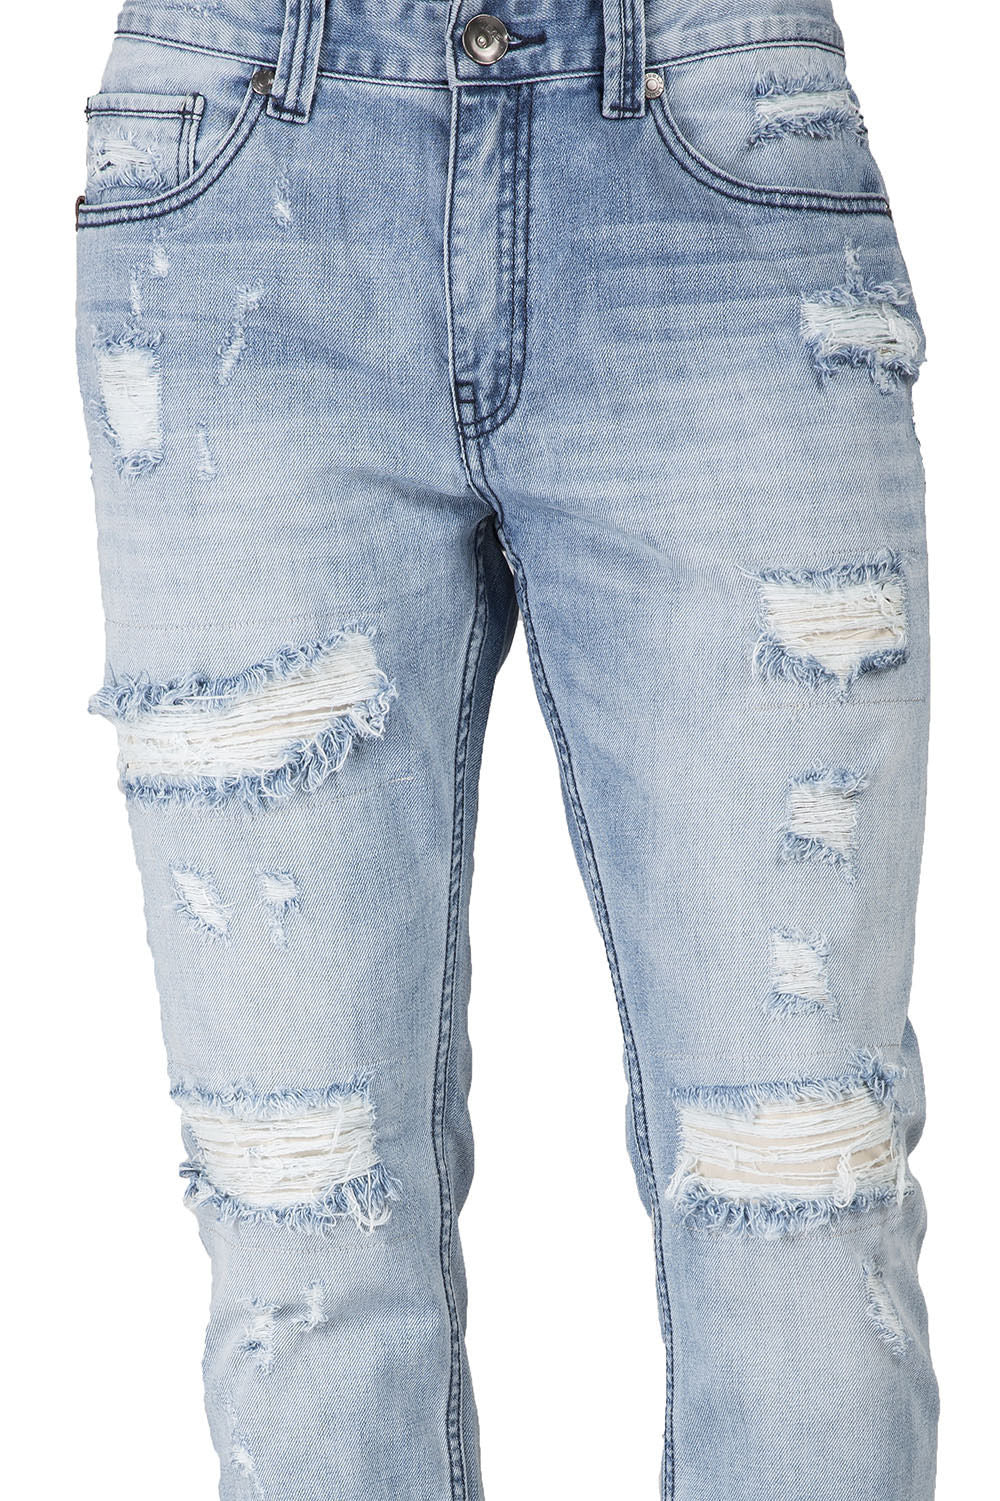 Distressed Powder Blue Slim Tapered Leg Premium Denim Jeans, signature 5 pocket with Ripped Repaired